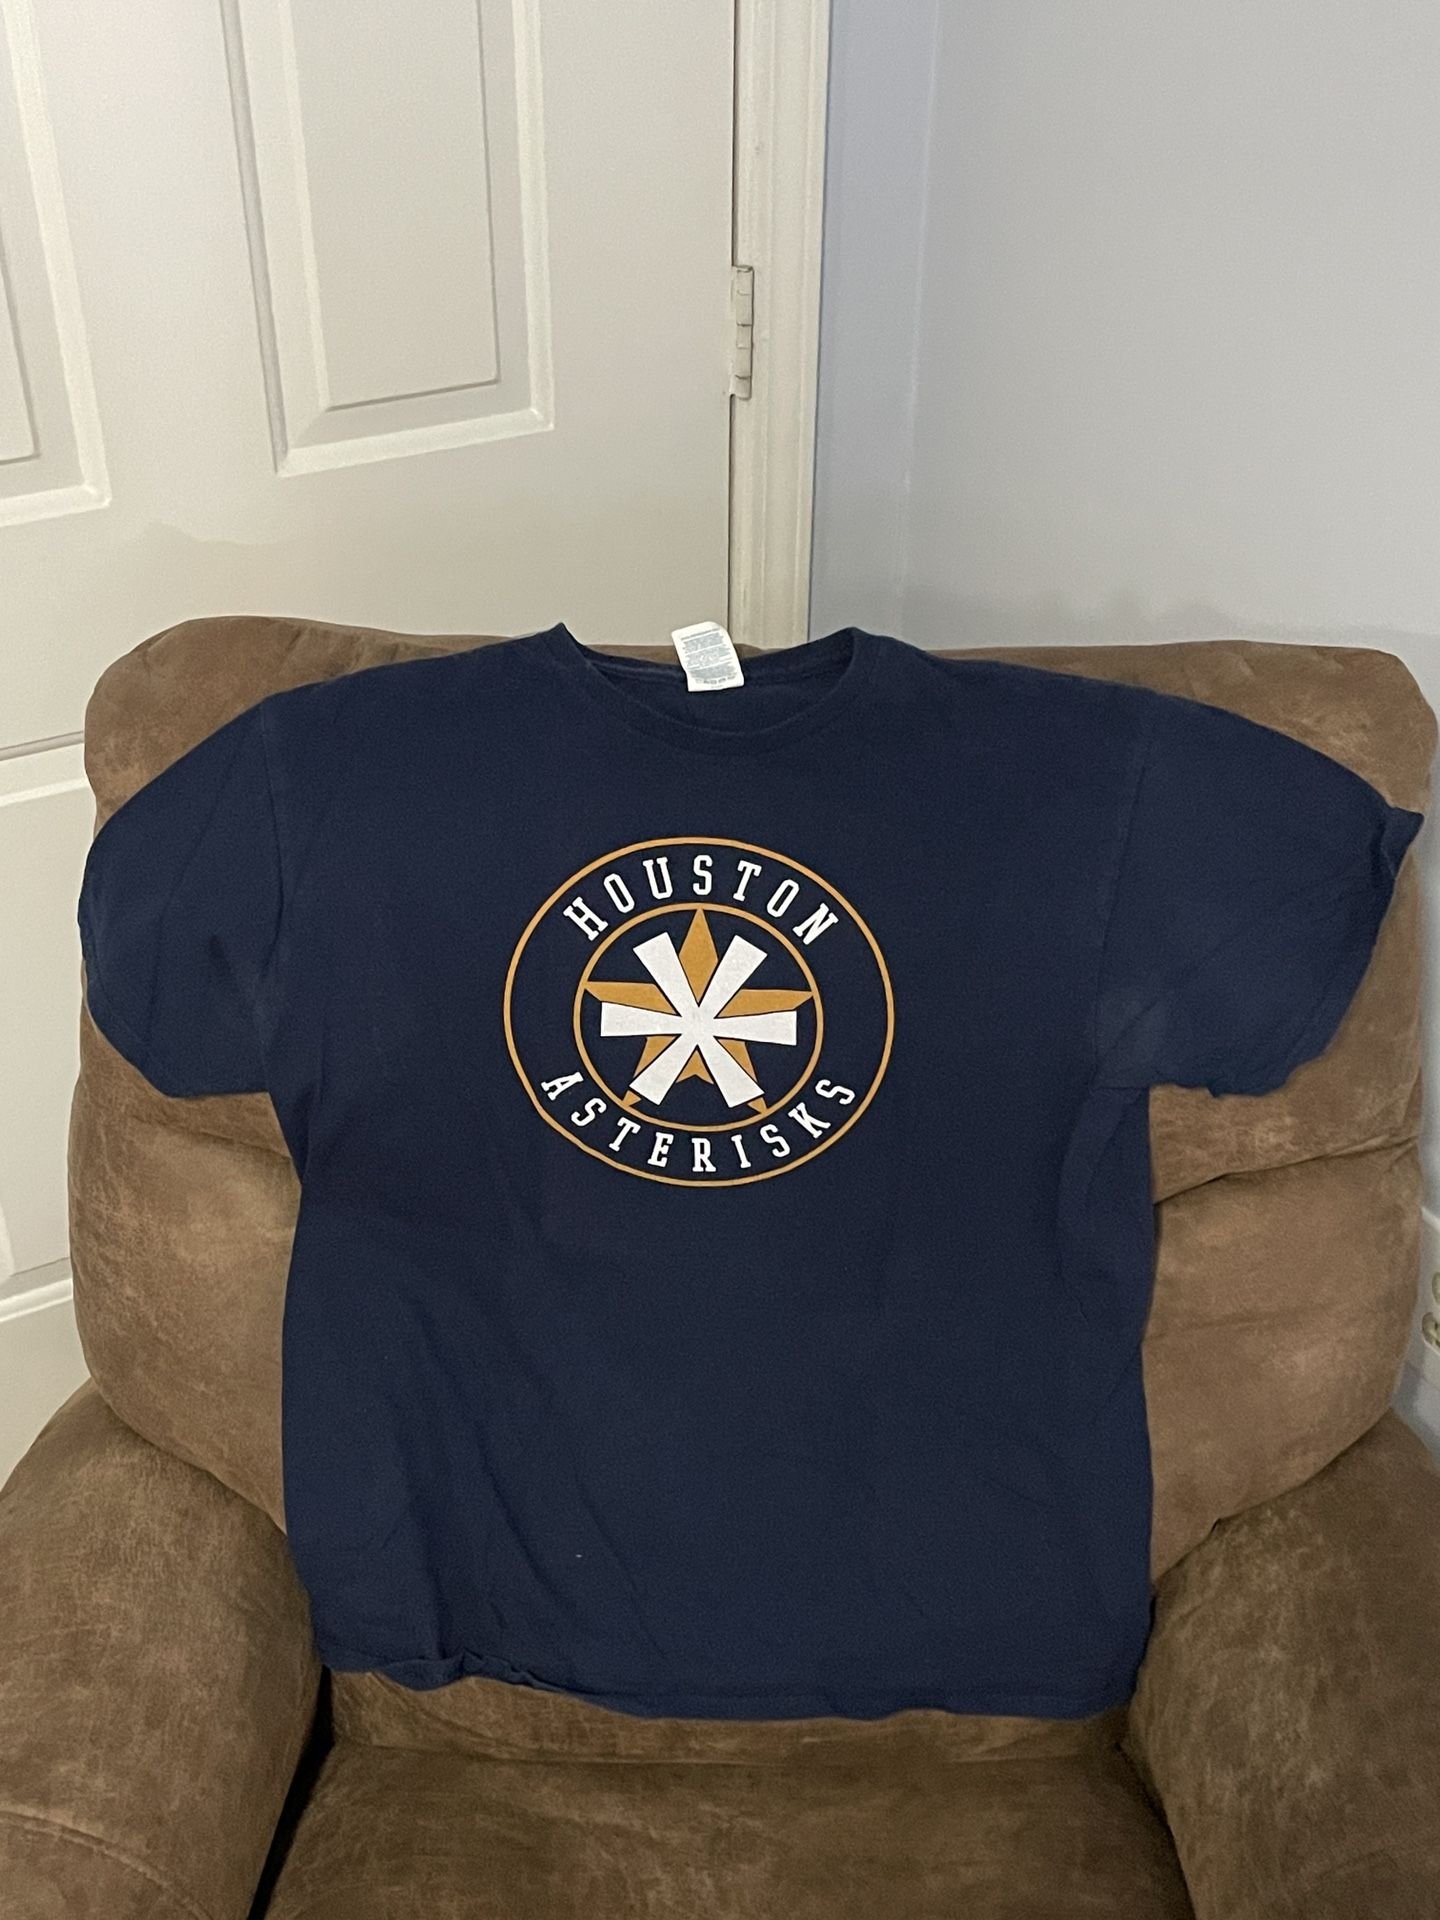 Houston “Asteriks” Astros T-Shirt (Large)